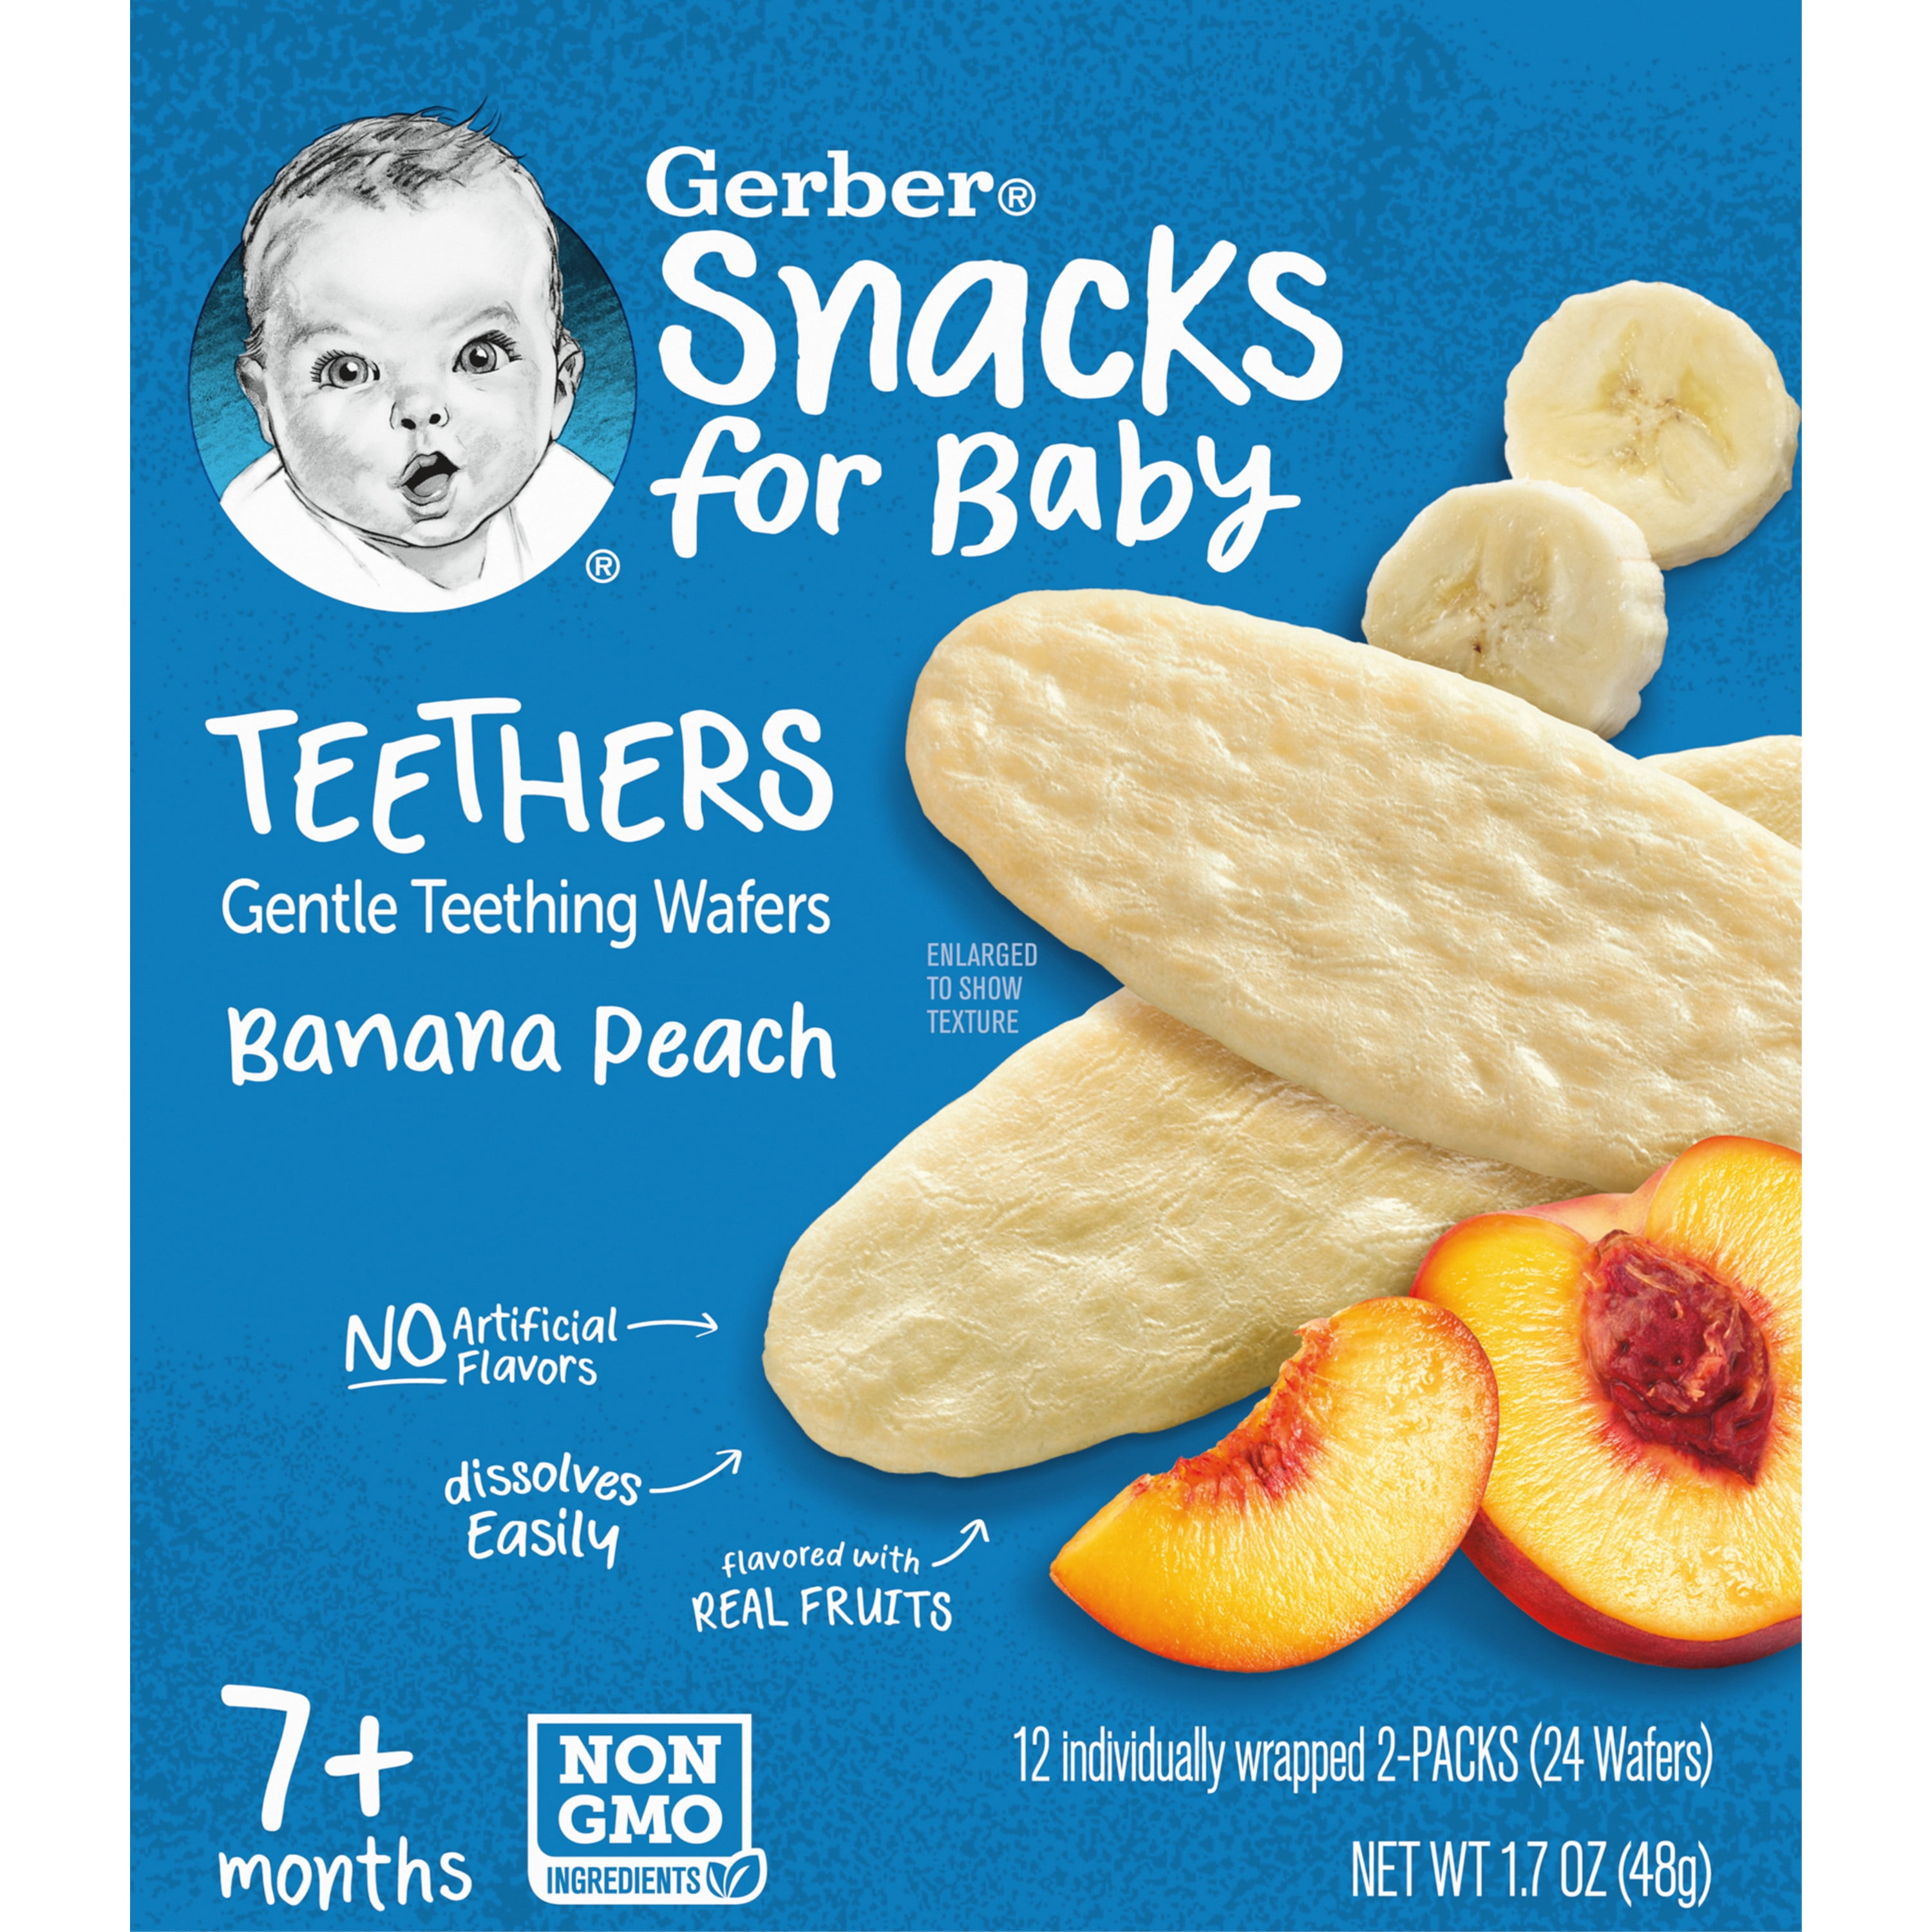 Gerber Snacks for Baby Teethers, Banana Peach, 1.7 oz Box (12 Pack)